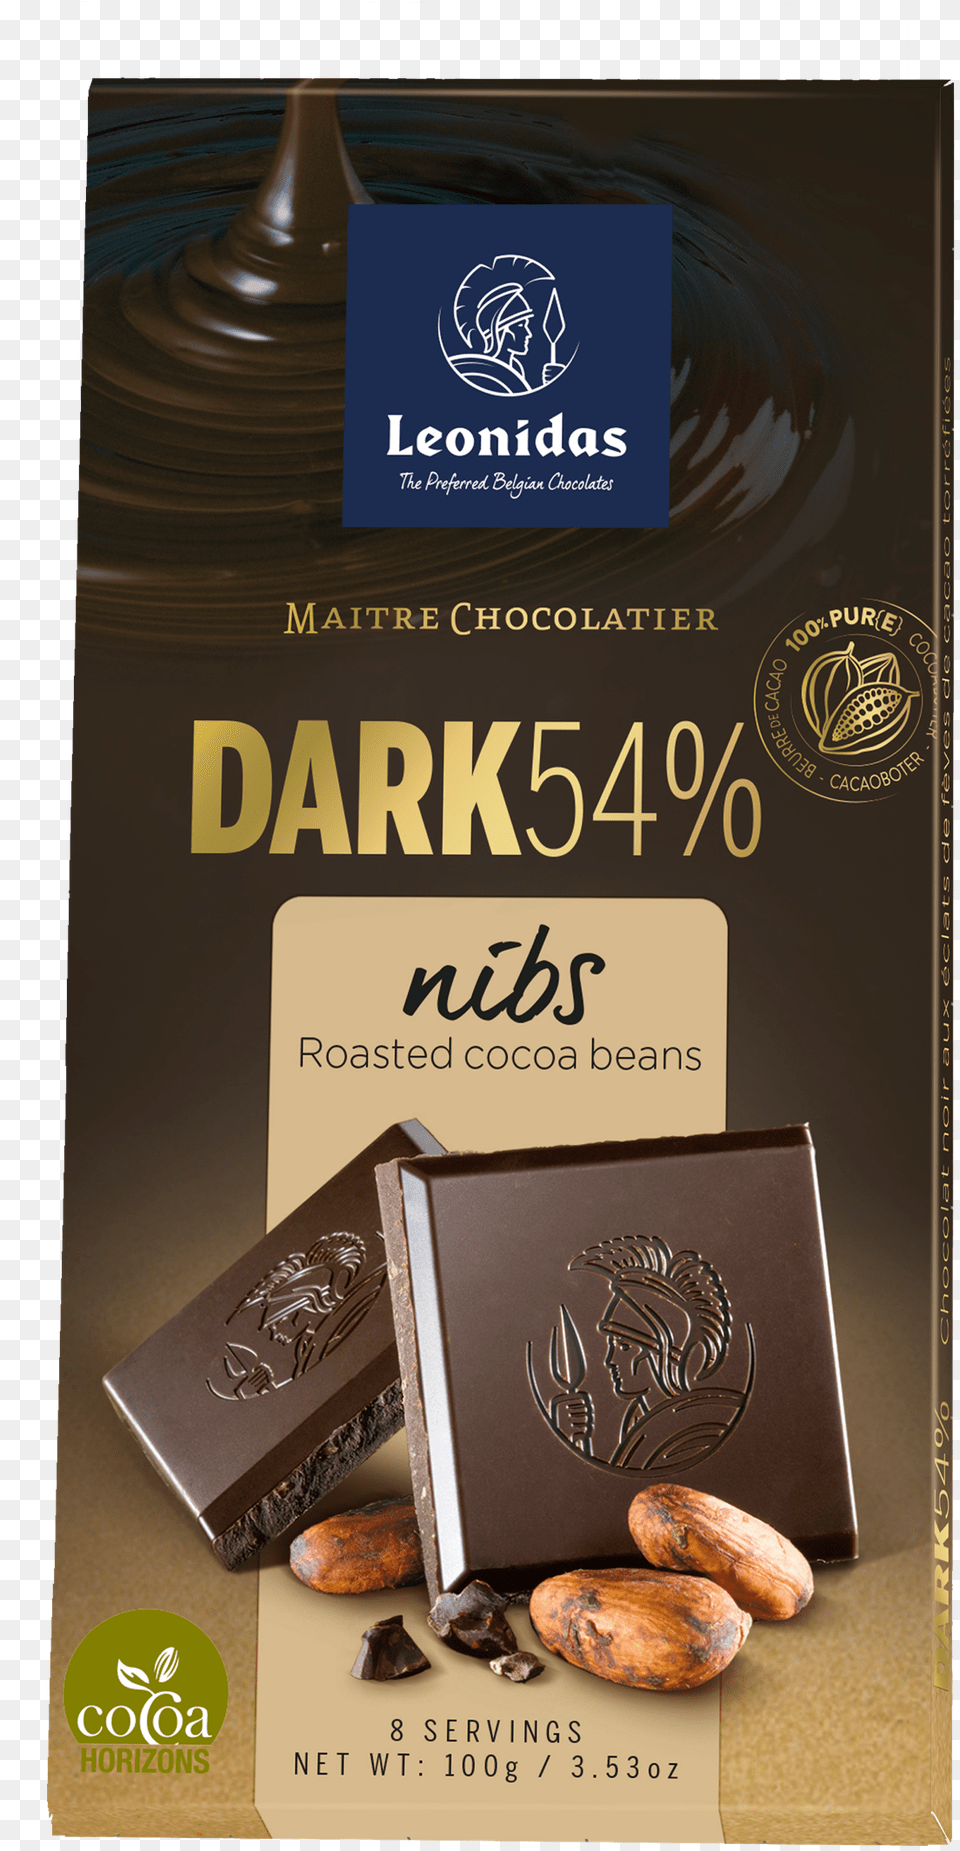 Leonidas Dark 54 Nibs Roasted Cocoa Beans Bars 100g Bars Leonidas Chocolate Bars, Dessert, Food, Advertisement, Business Card Free Png Download